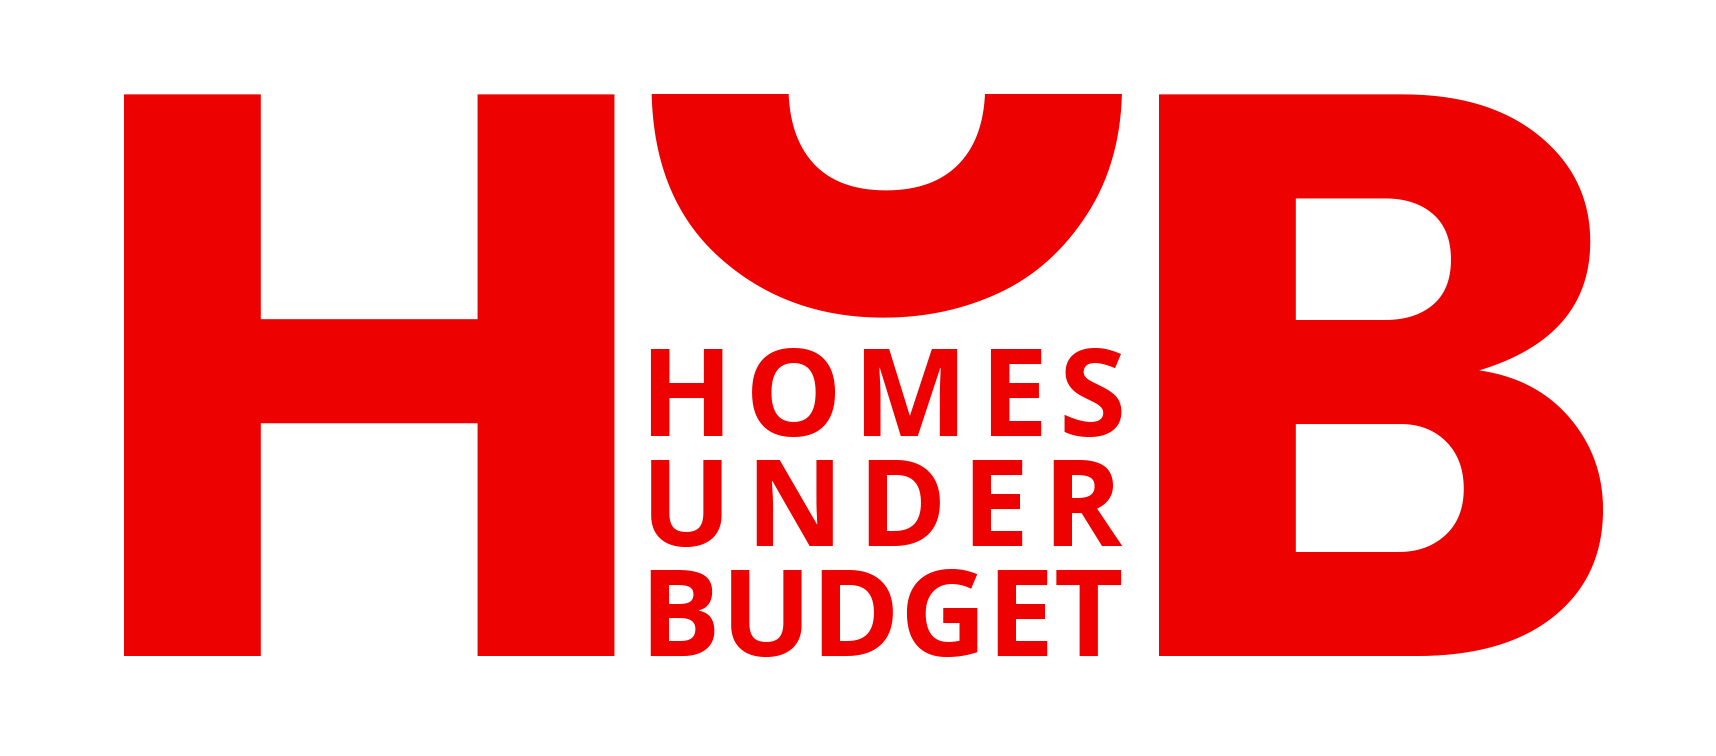 Homes Under Budget